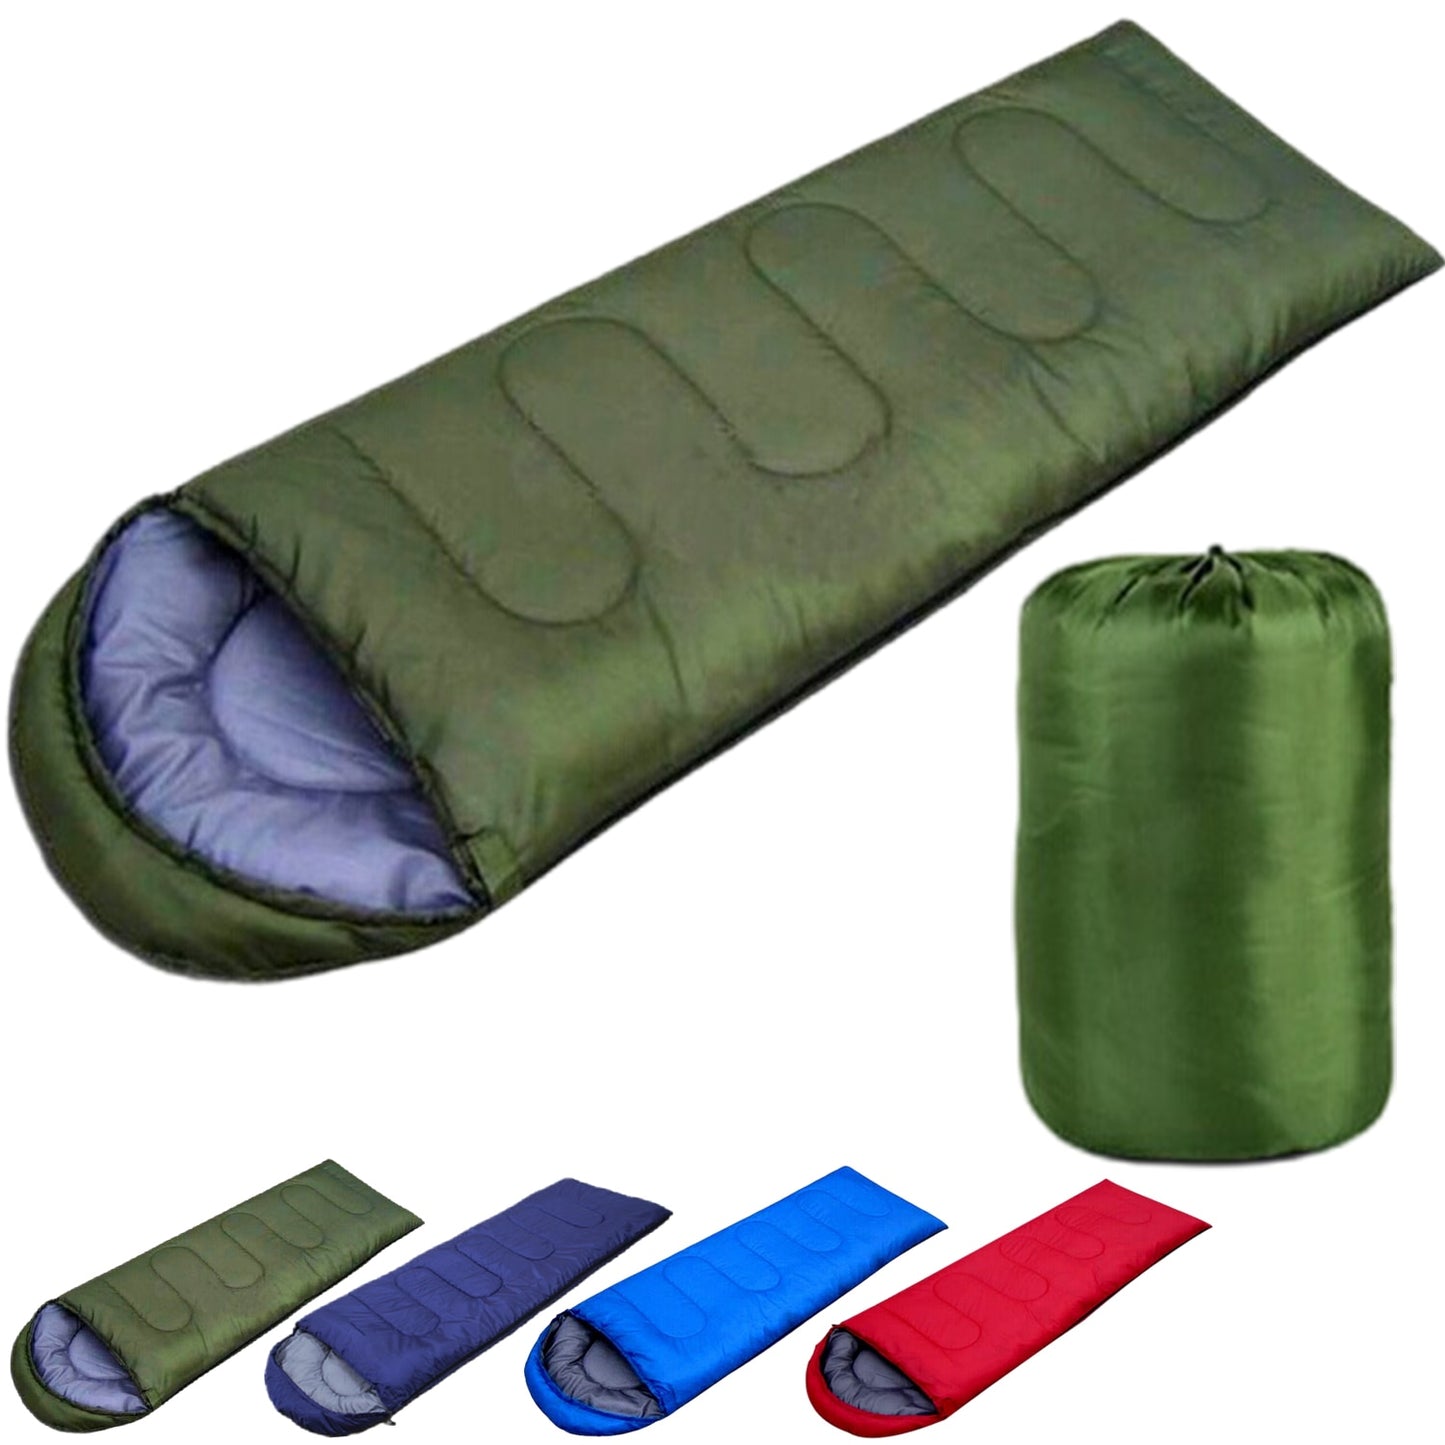 Sleeping Bags,Waterproof Sleep bag for Adults Teens Kids with Storage Sack,Portable for 4 Season Camping,Hiking,Outdoors,Travel